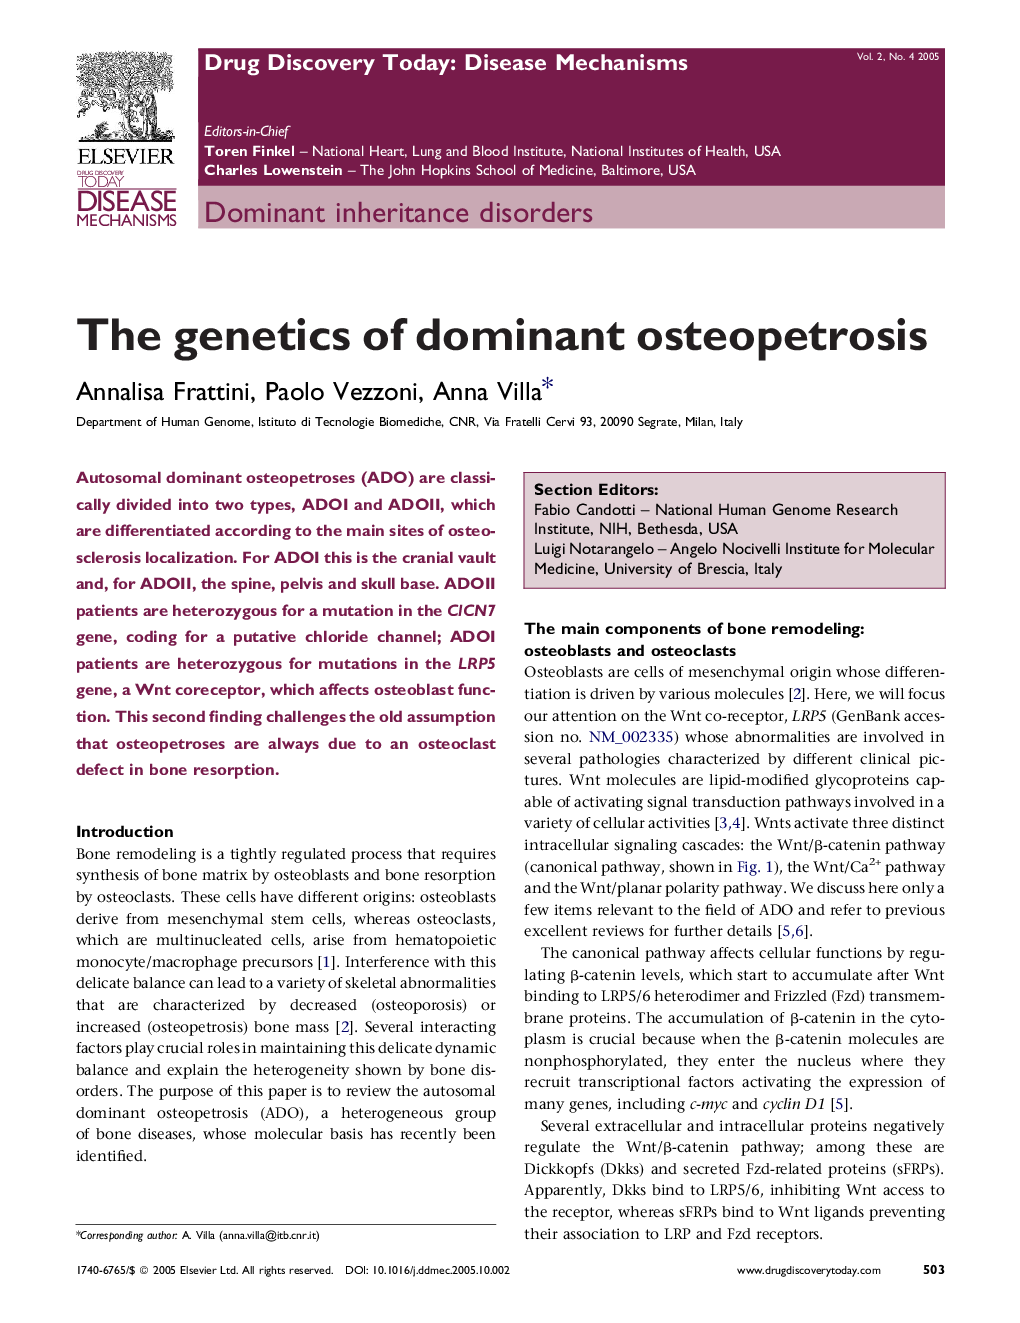 The genetics of dominant osteopetrosis